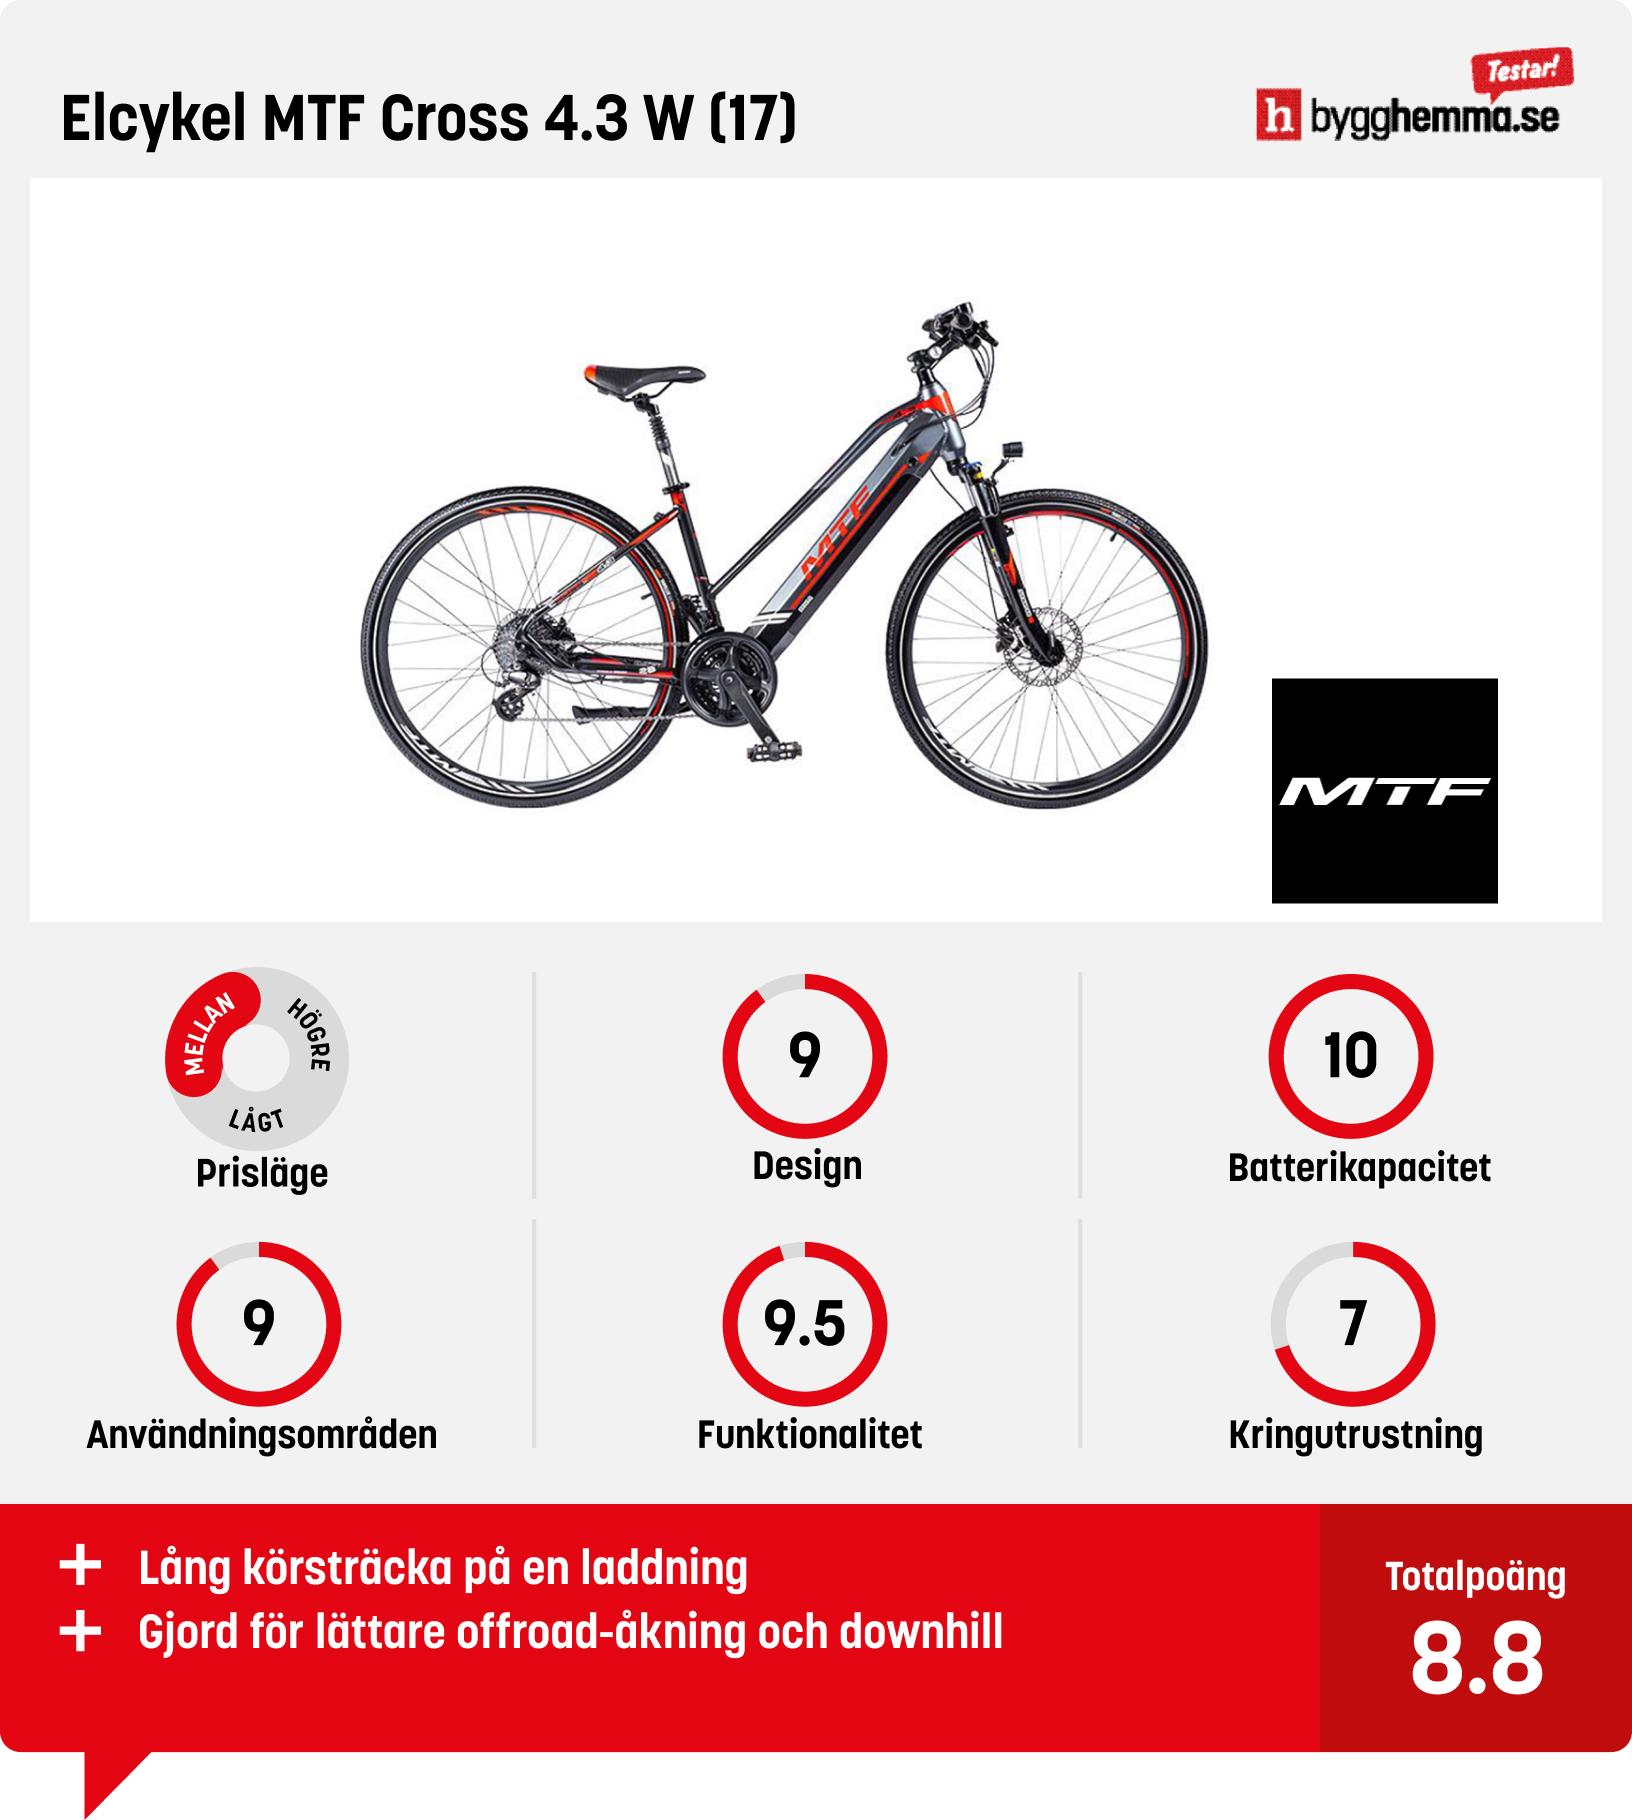 Elcykel dam bäst i test - Elcykel MTF Cross 4.3 W (17)